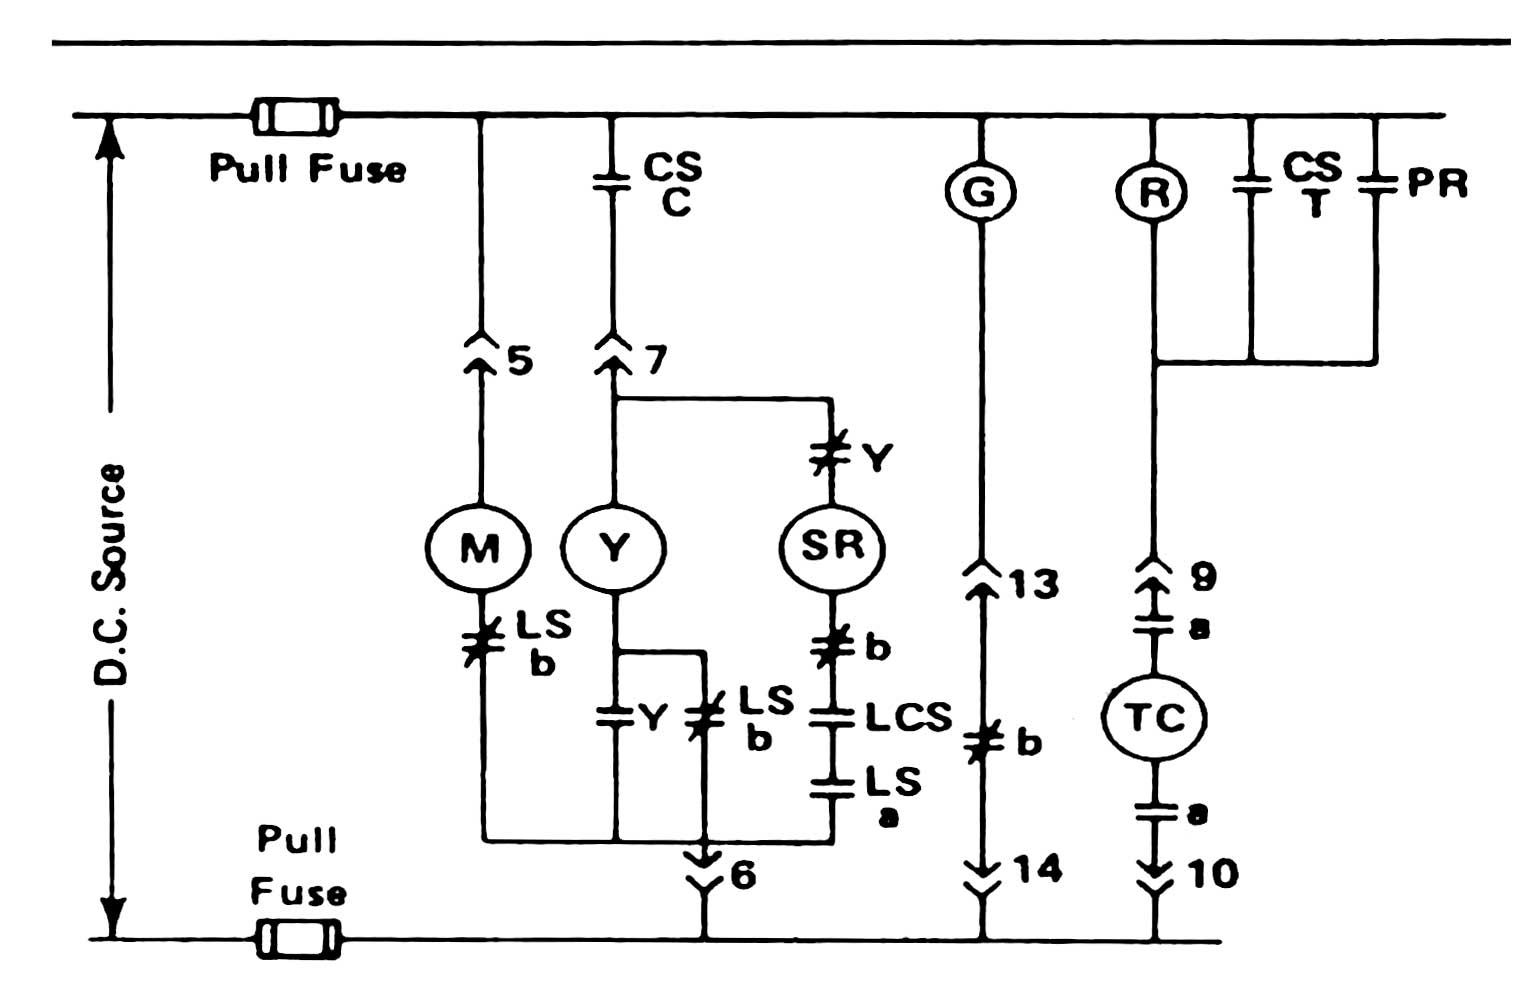 Circuit Breaker Diagram Wiring